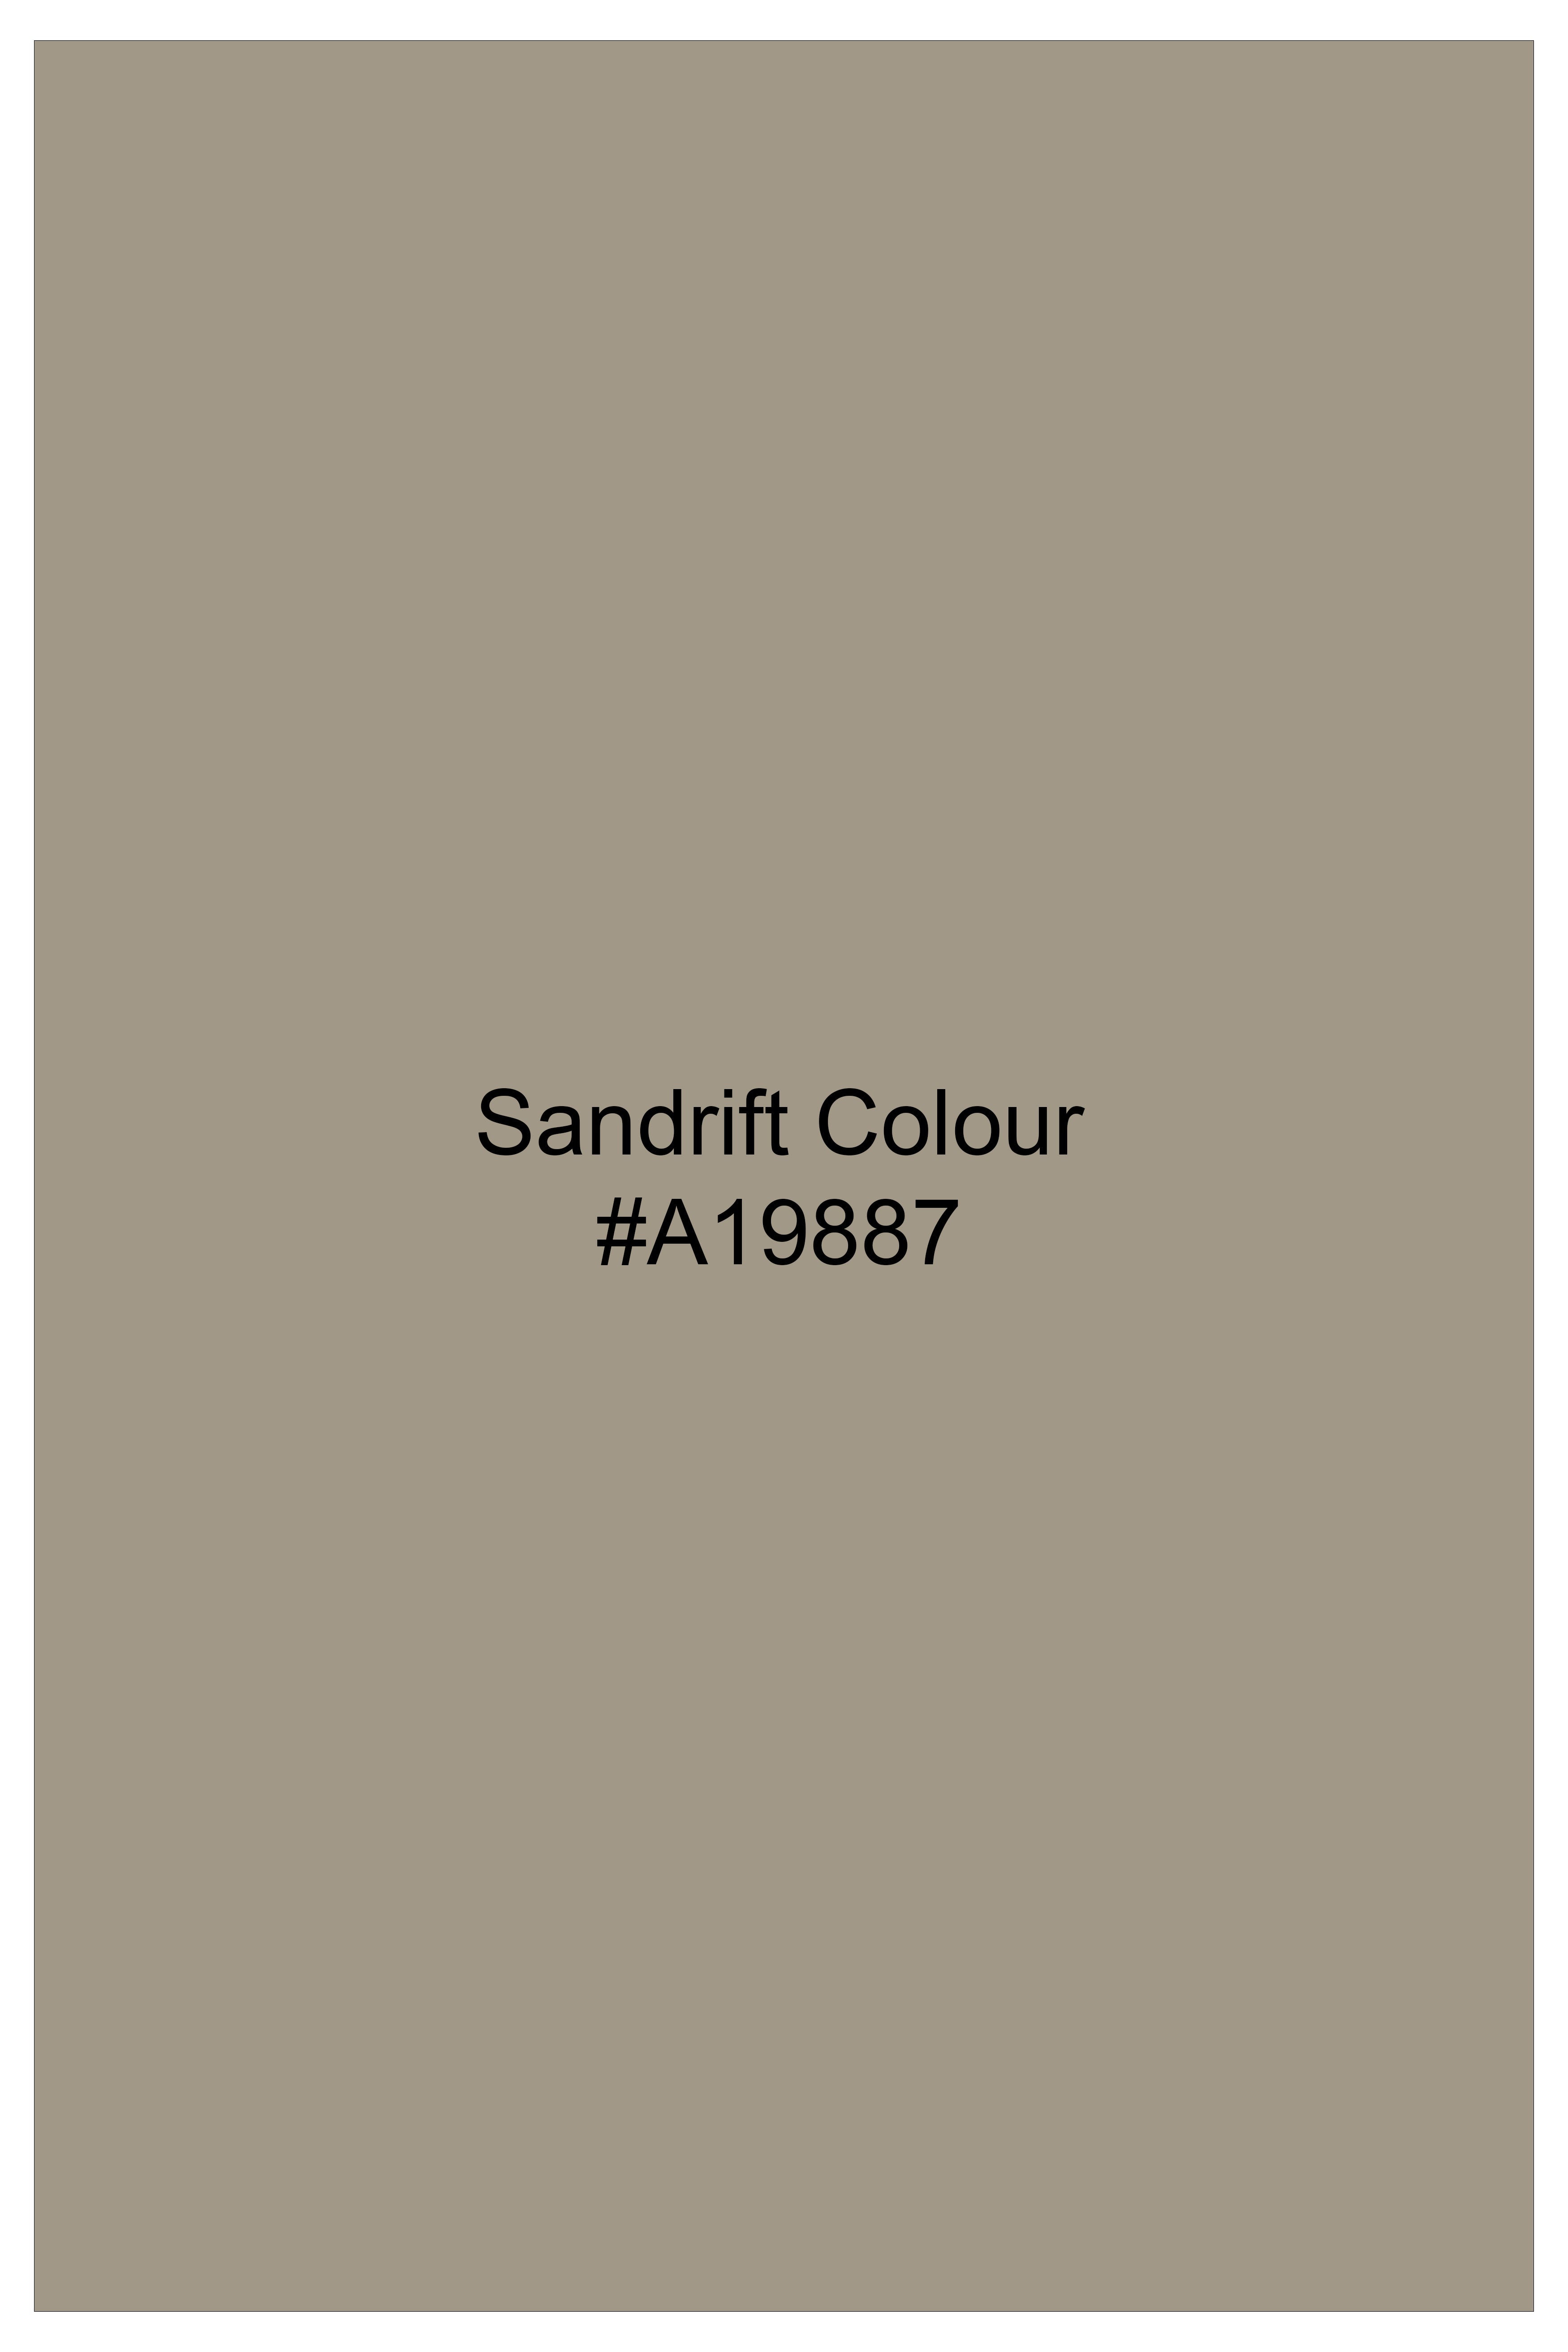 Sandrift Cream Plaid Wool Blend Bandhgala Blazer